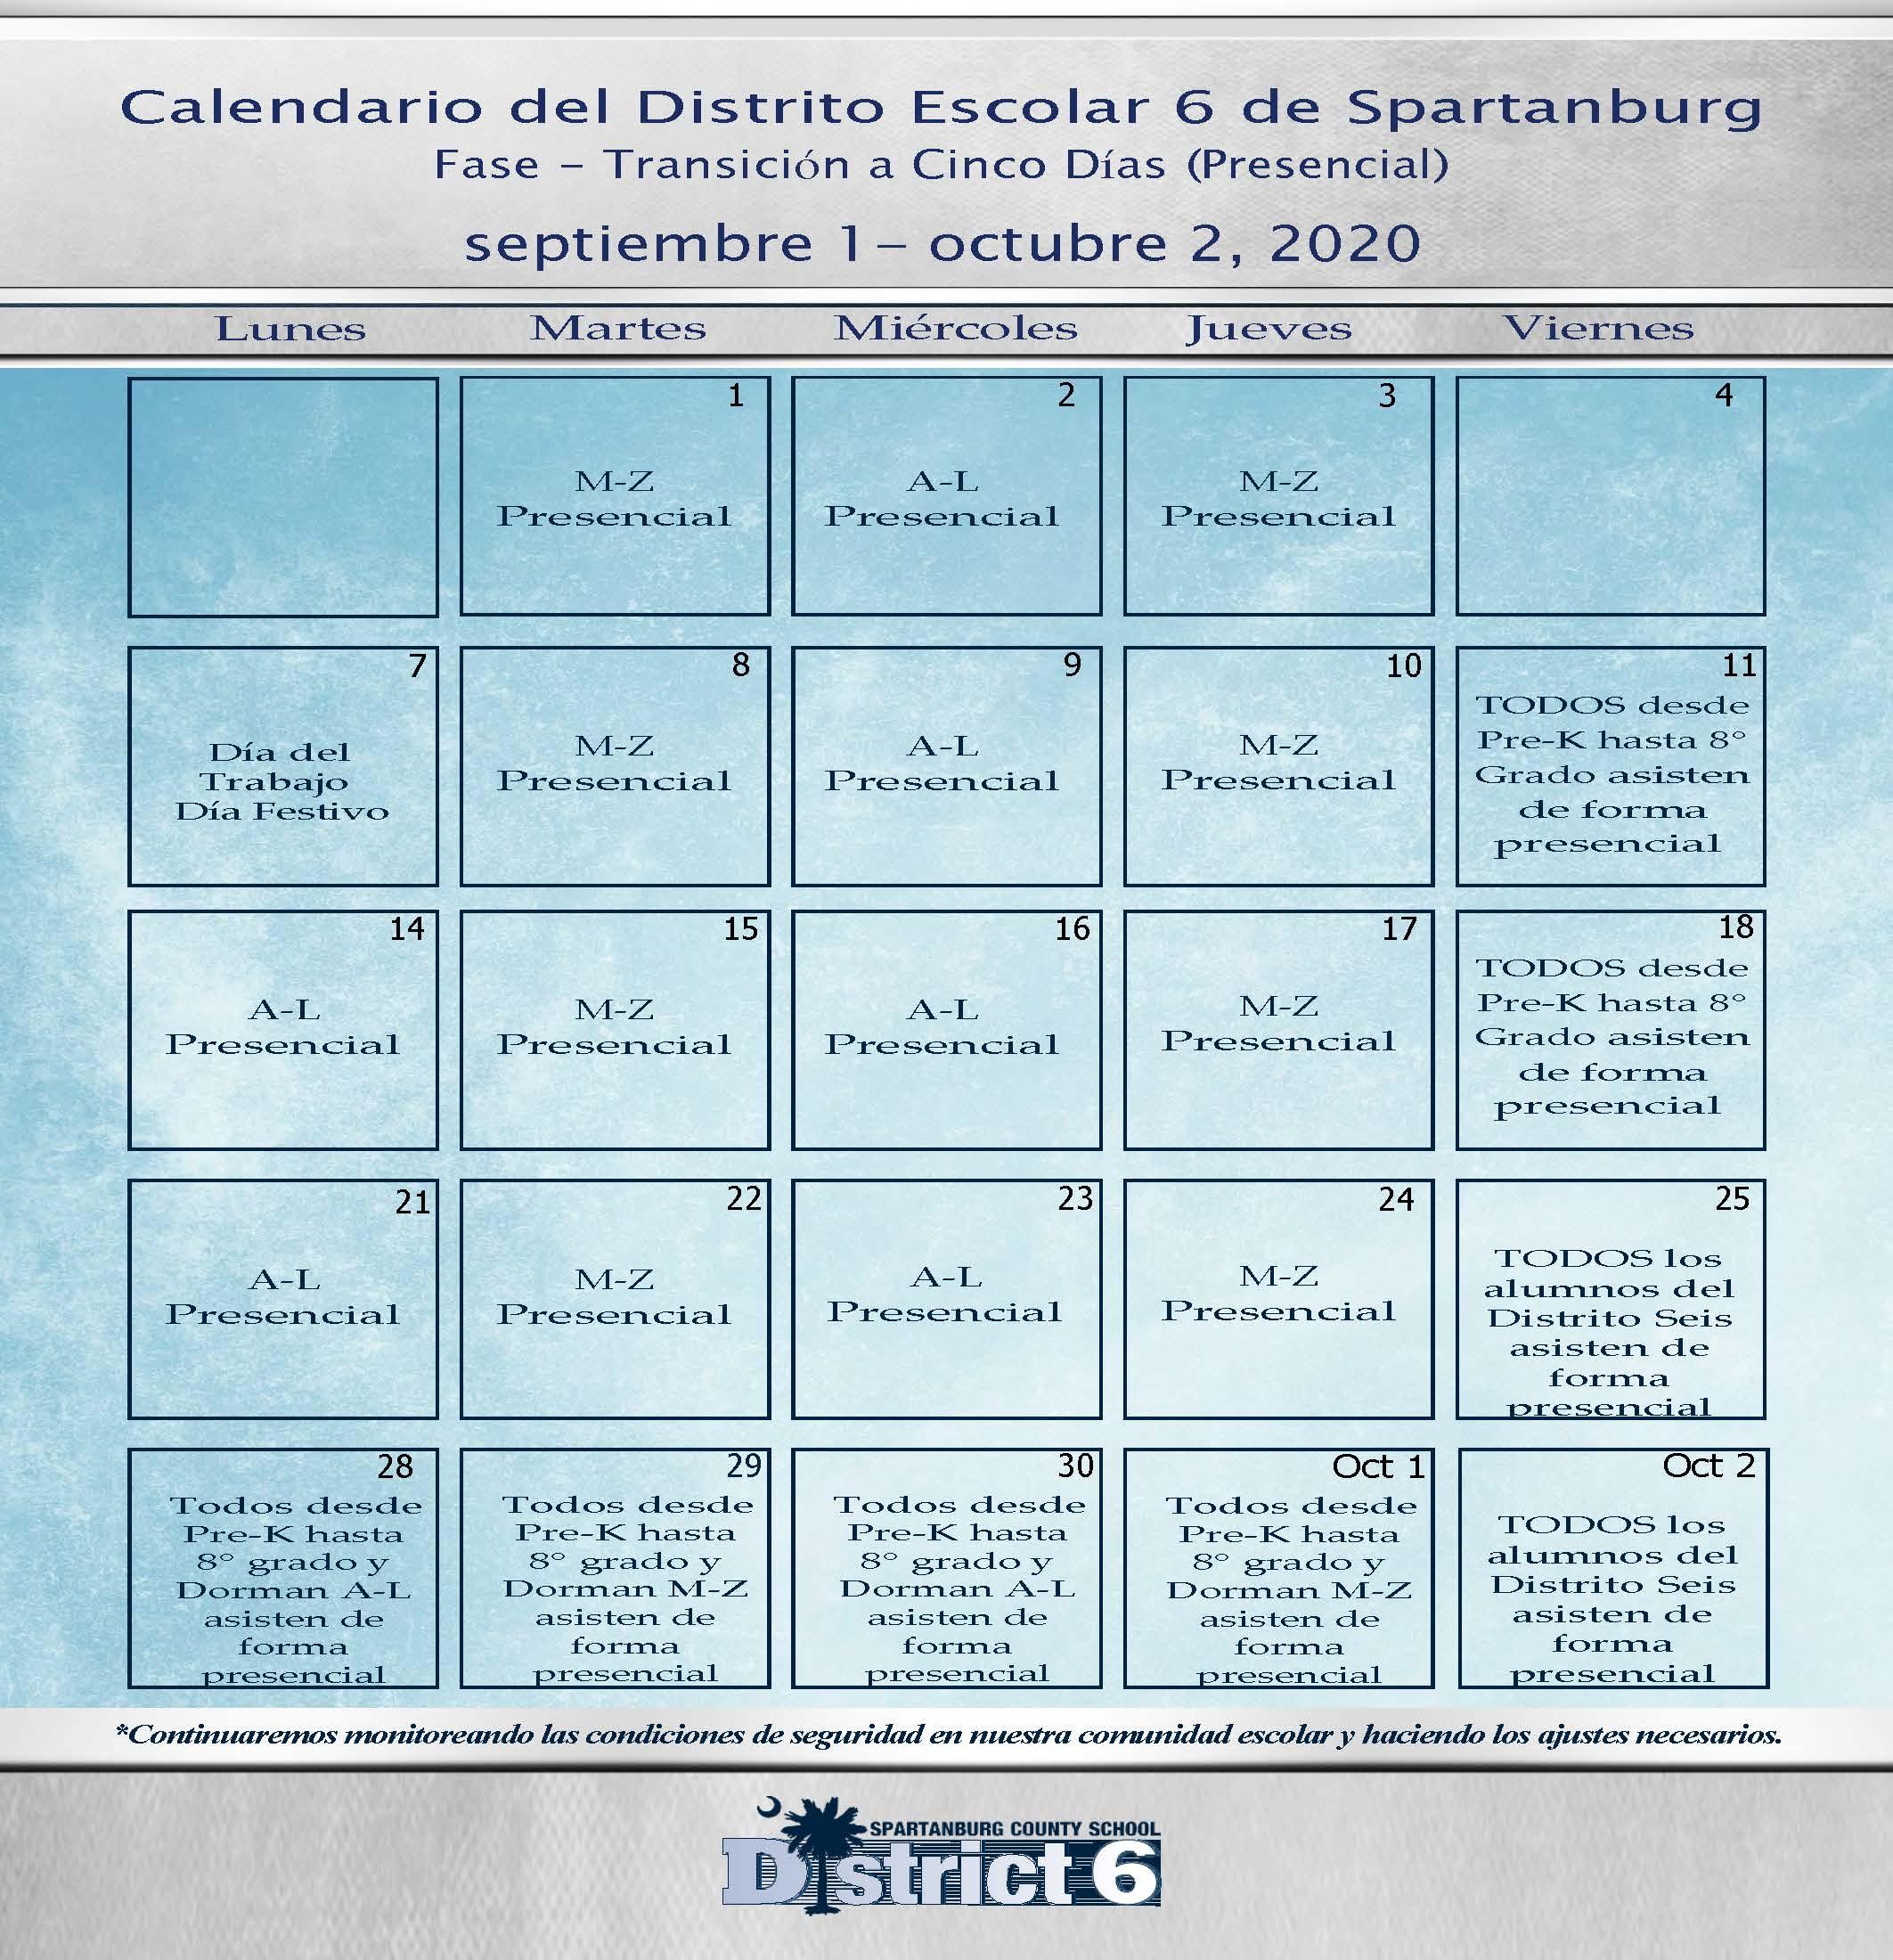 Spanish version calendar